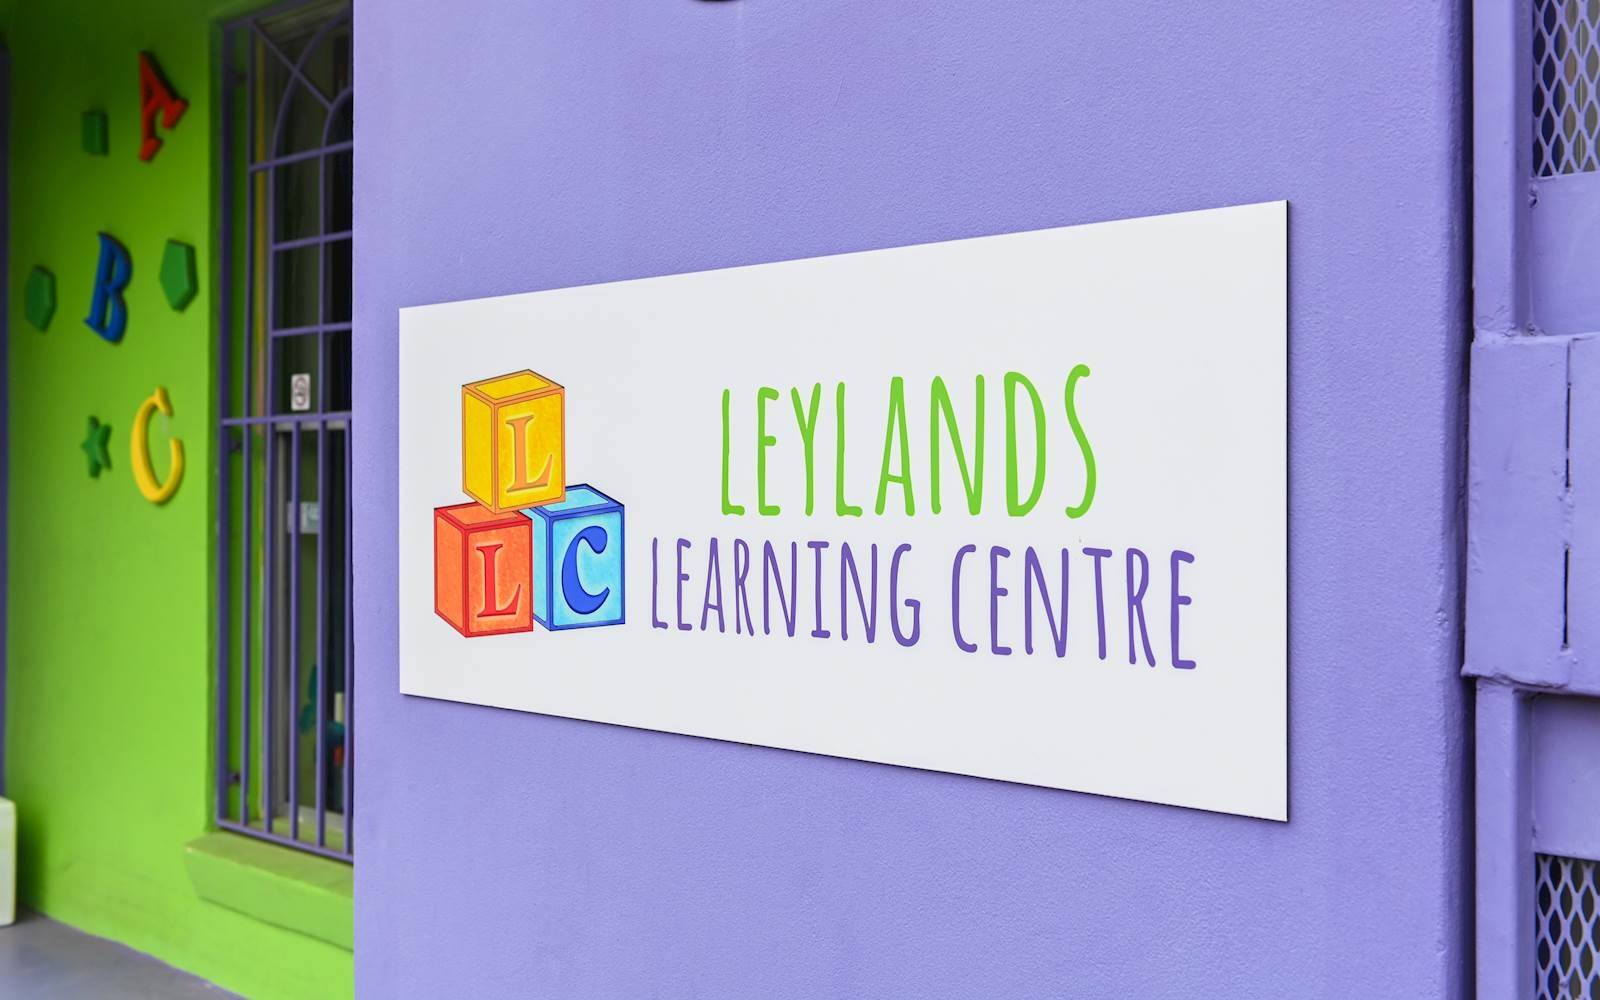 Leylands Learning Centre